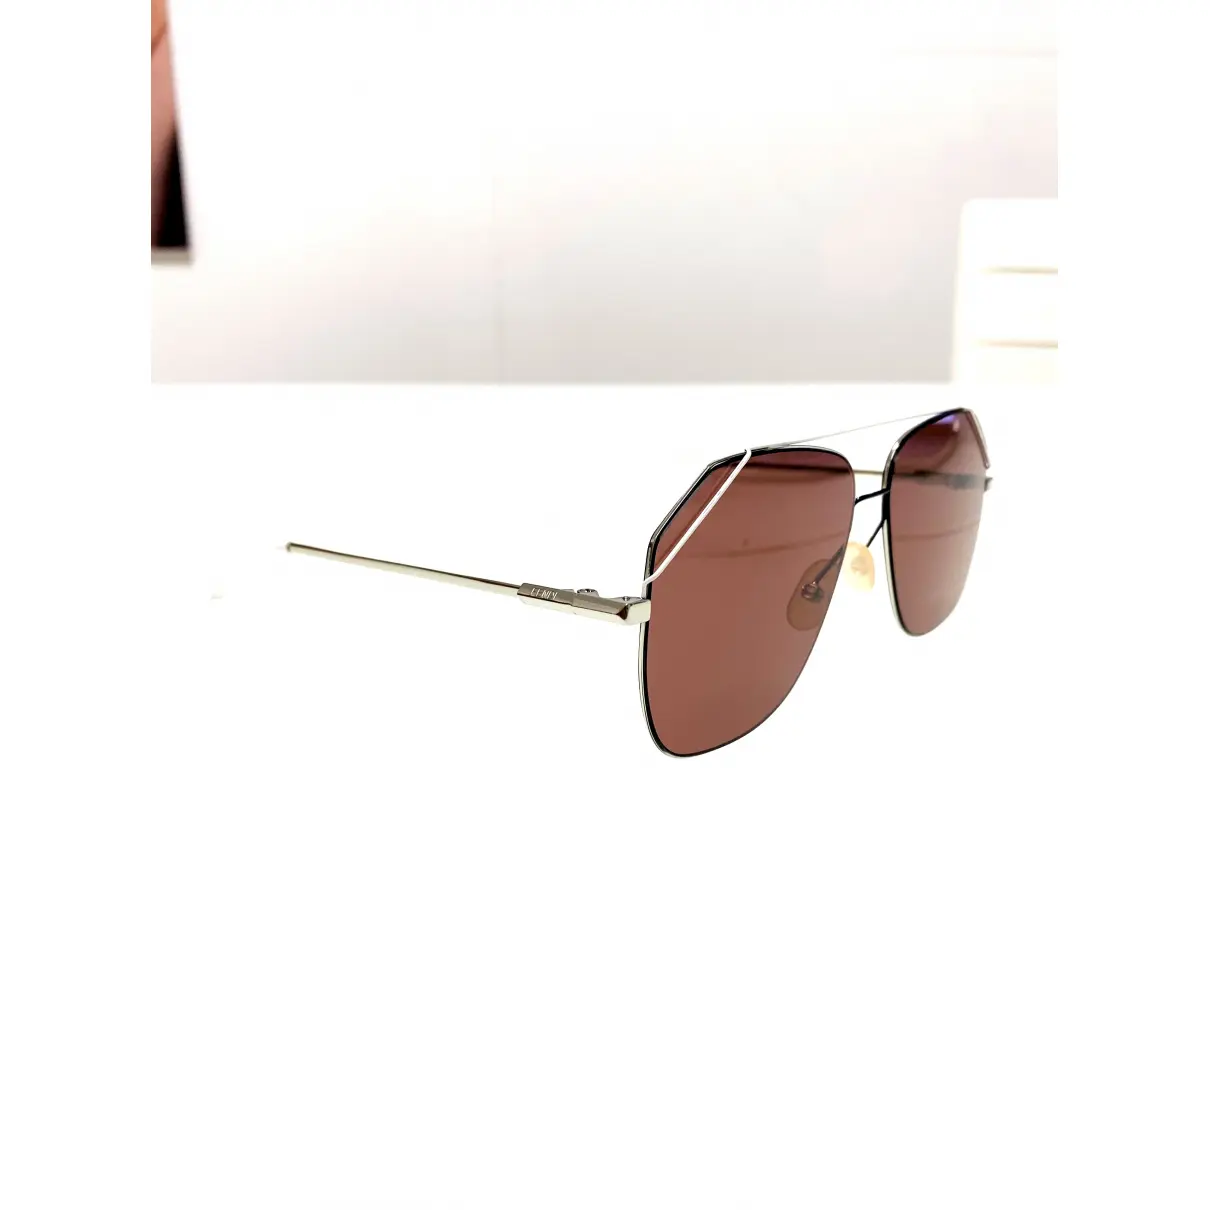 Buy Fendi Aviator sunglasses online